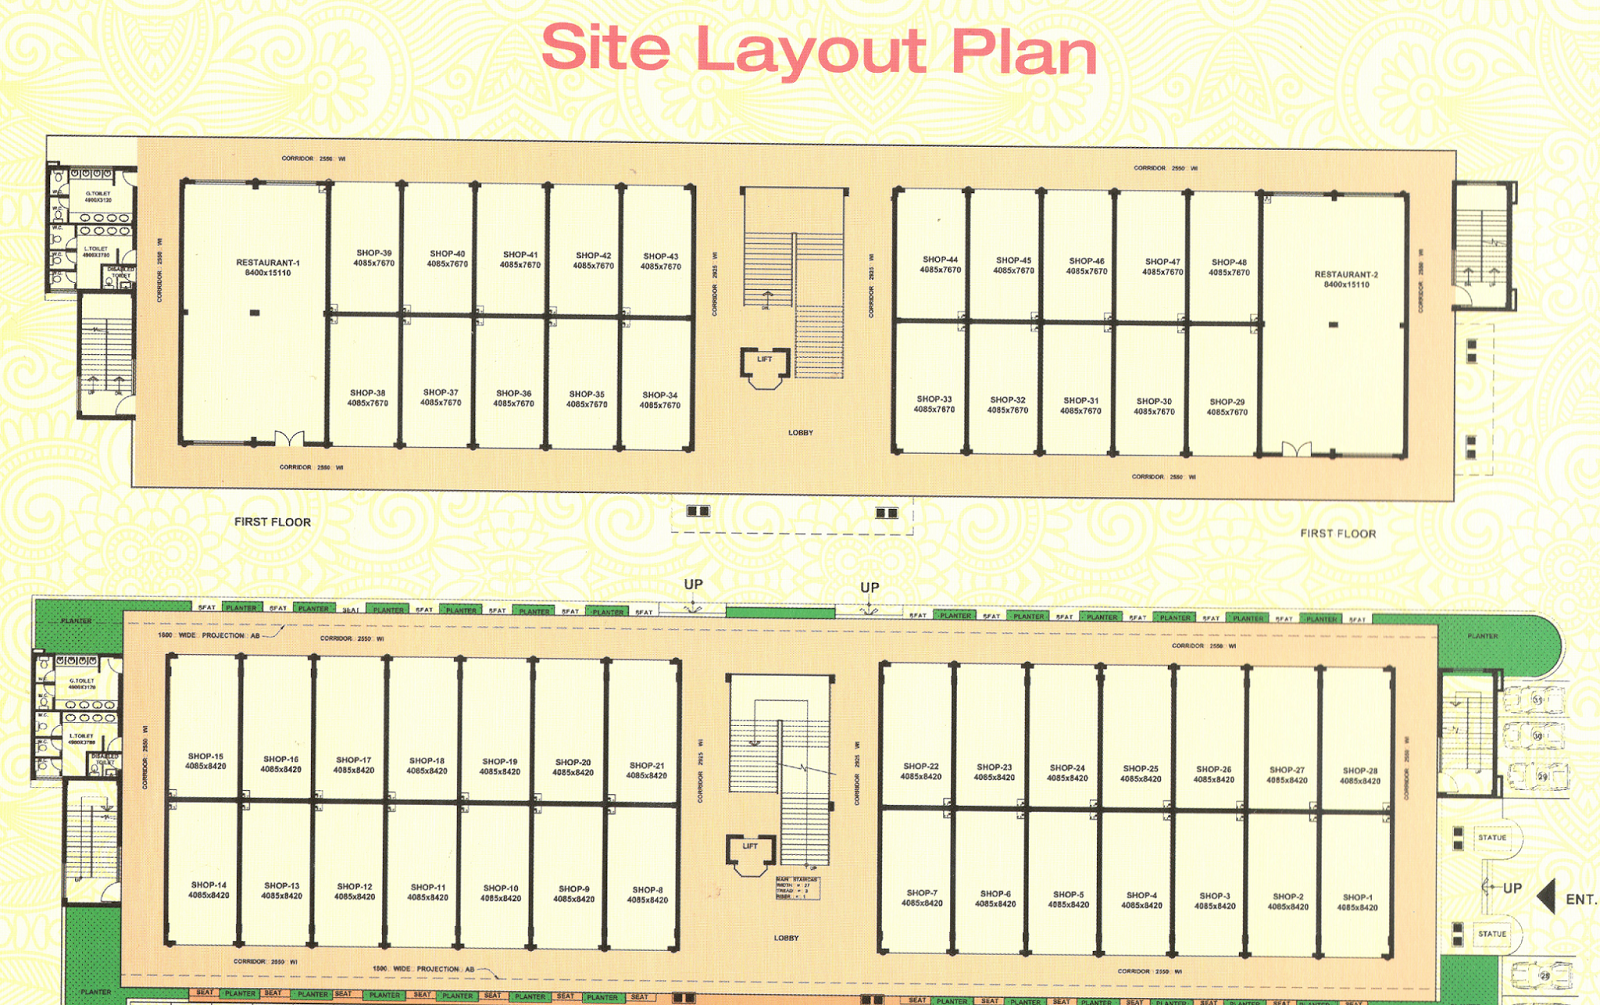 Global plan. Layout Plan. Site Layout. Layout Plan shopping Mall.